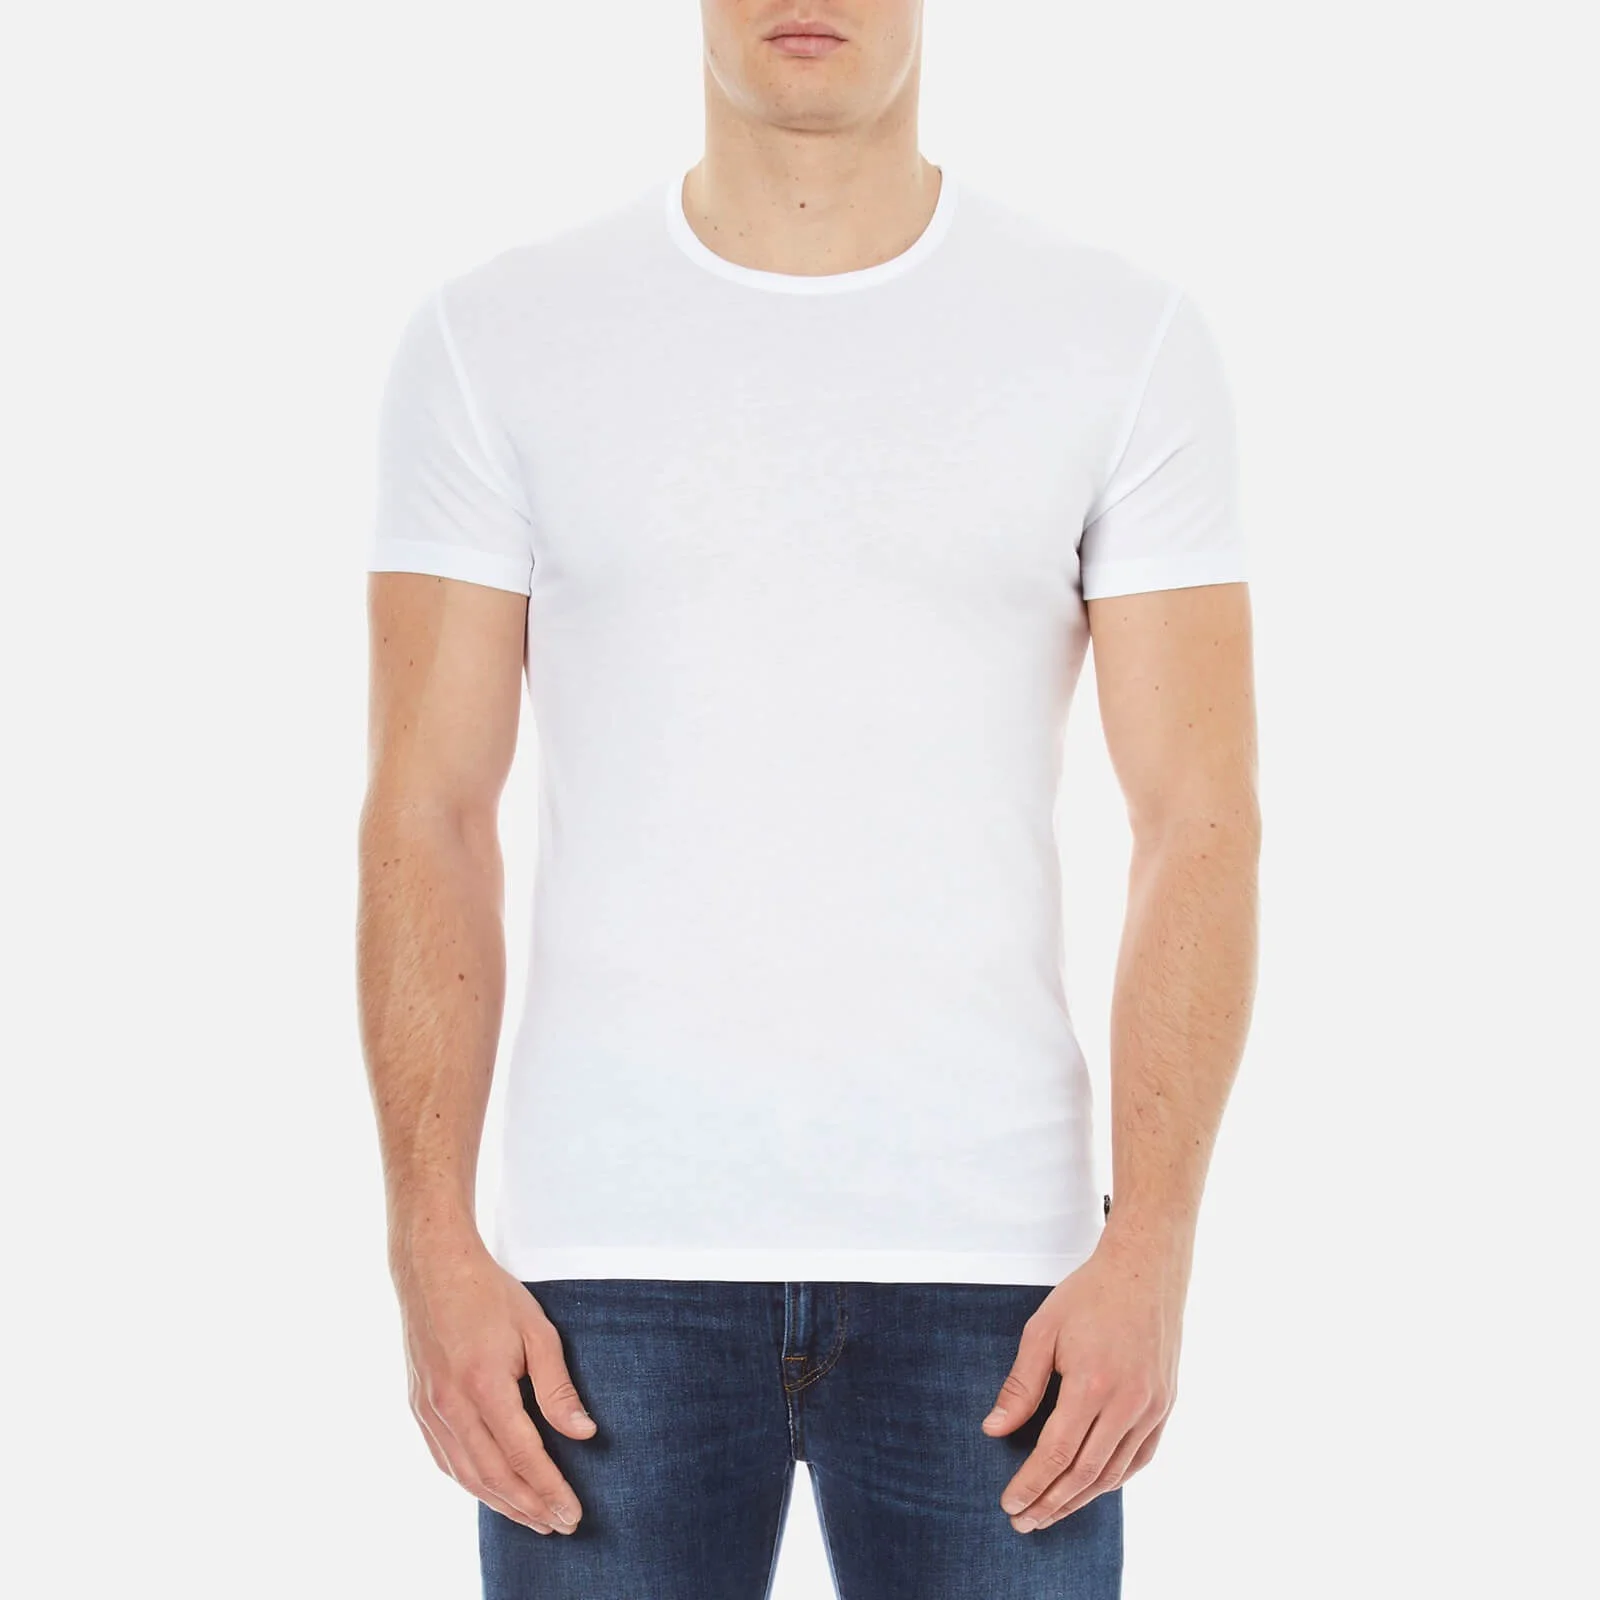 Paul Smith Men's Crew Neck T-Shirt - White Image 1